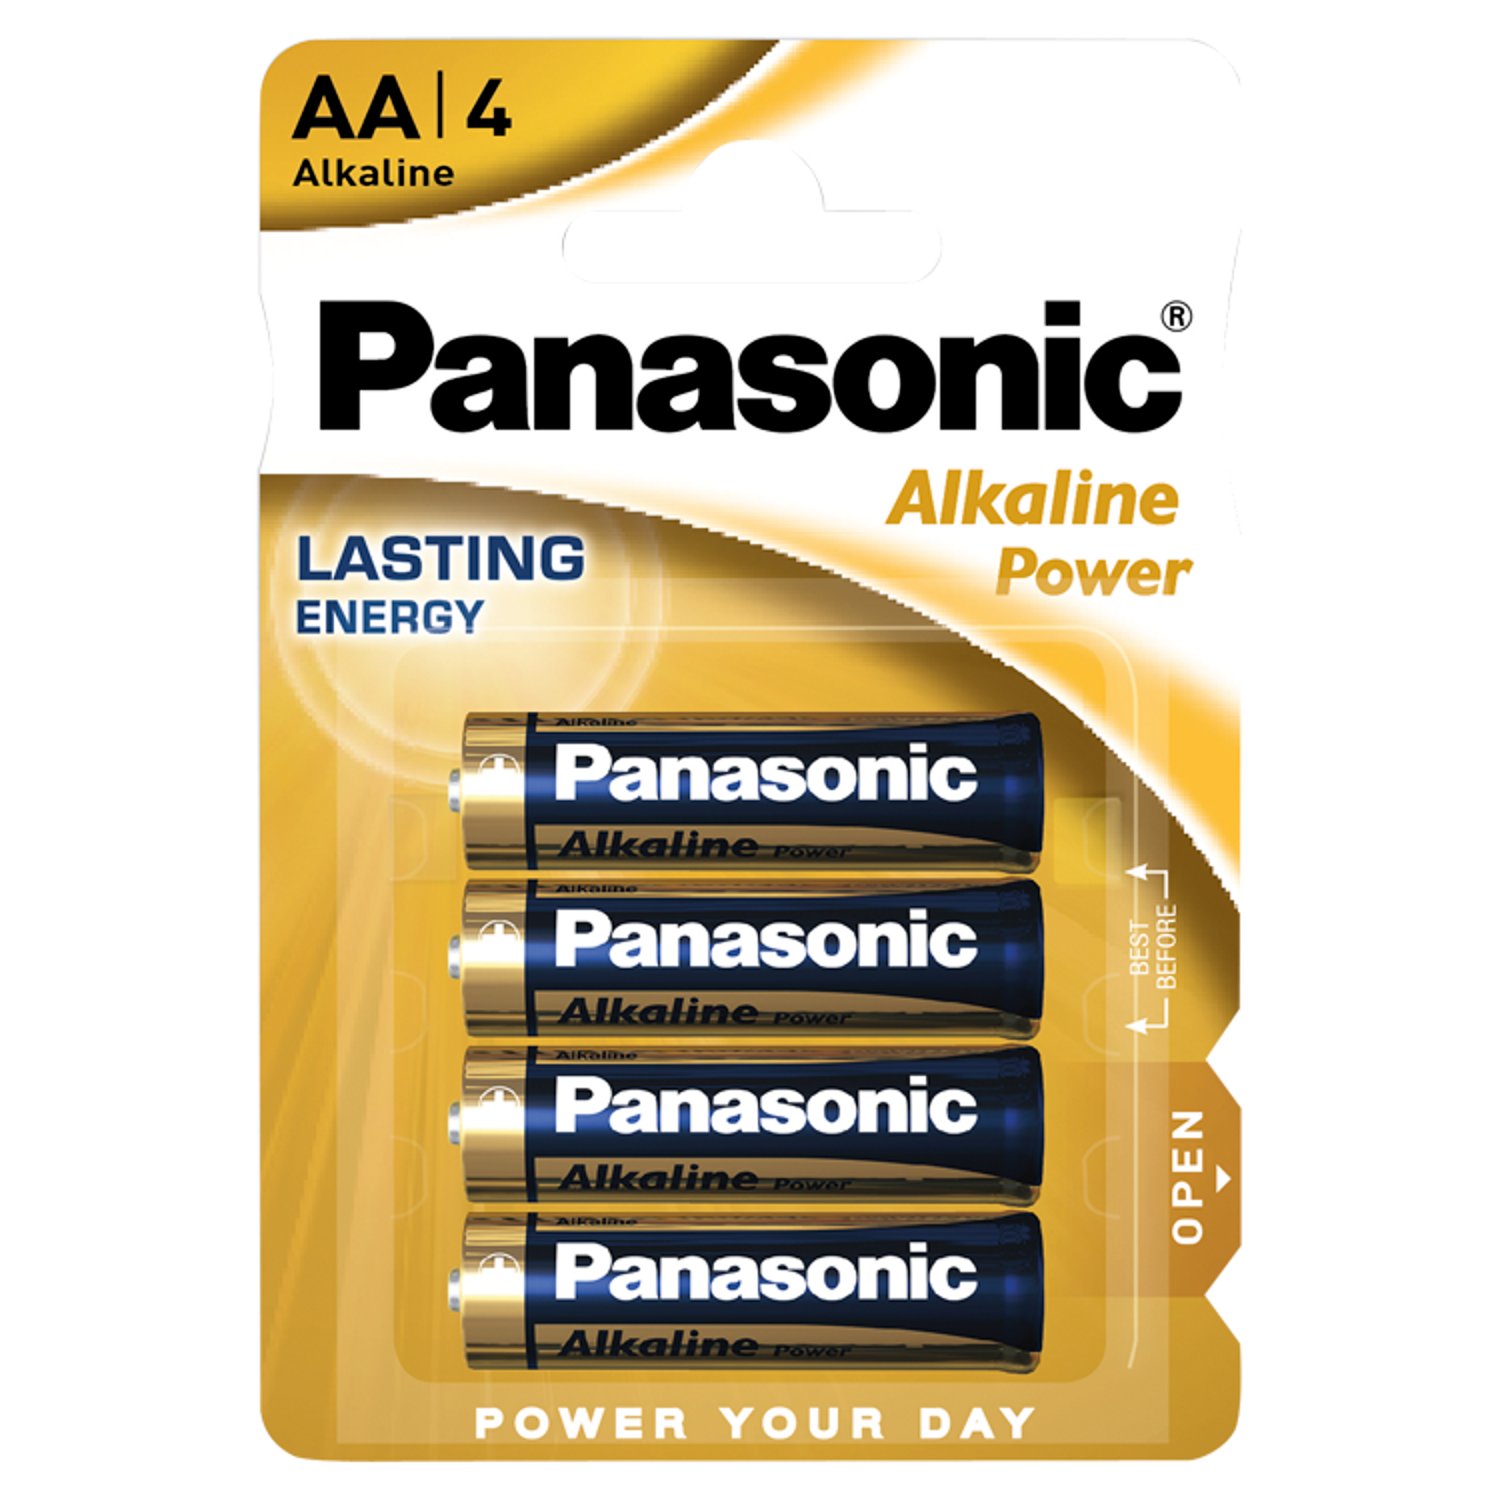 Panasonic Alkaline Power AA Batteries 4 Pack (4 Piece)